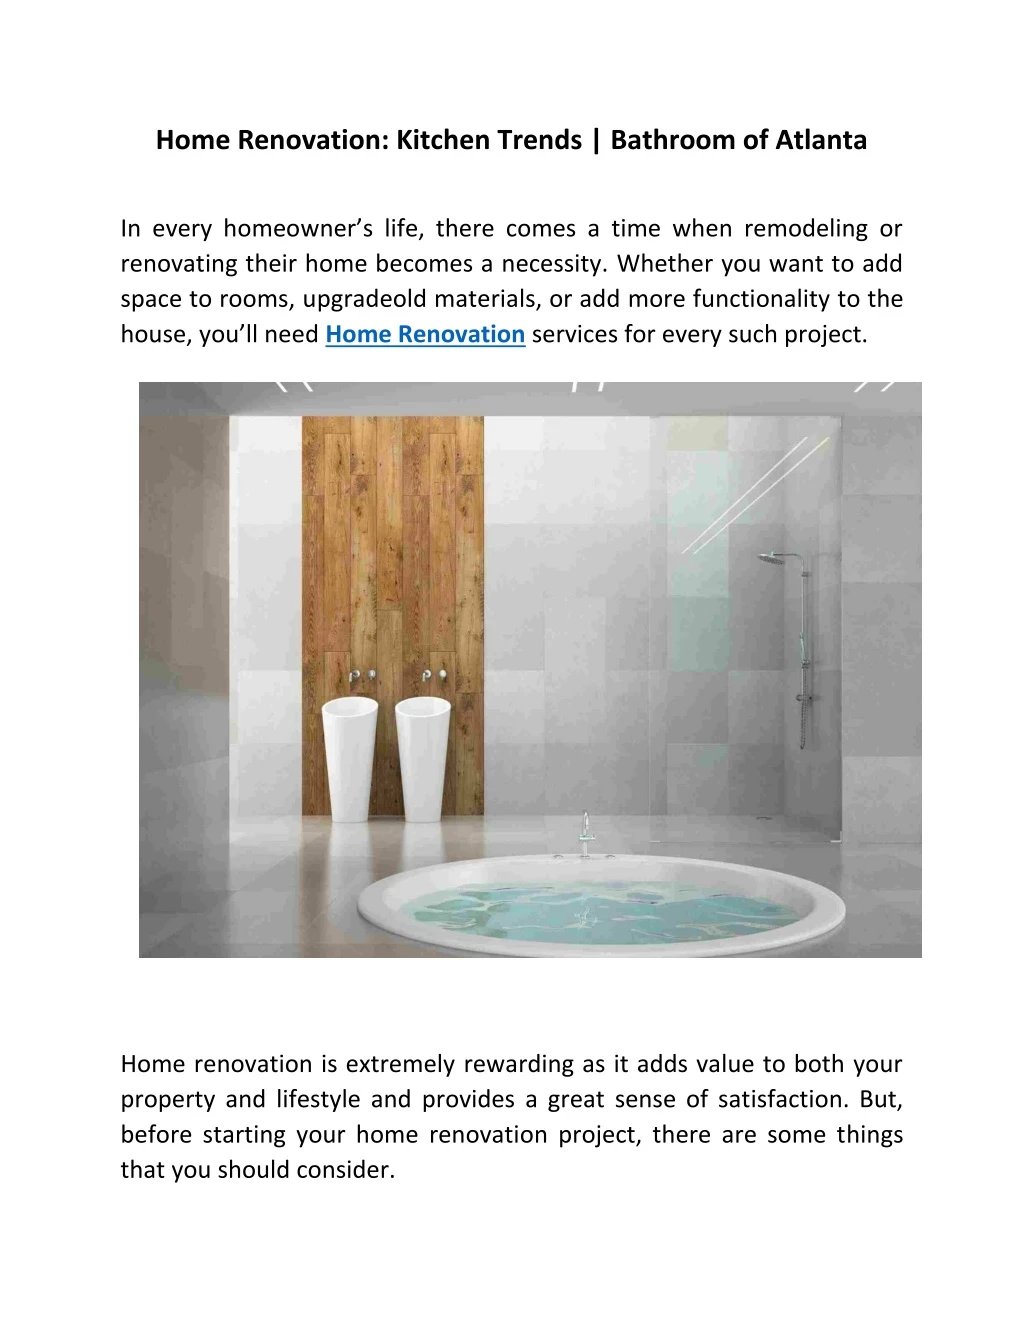 home renovation kitchen trends bathroom of atlanta